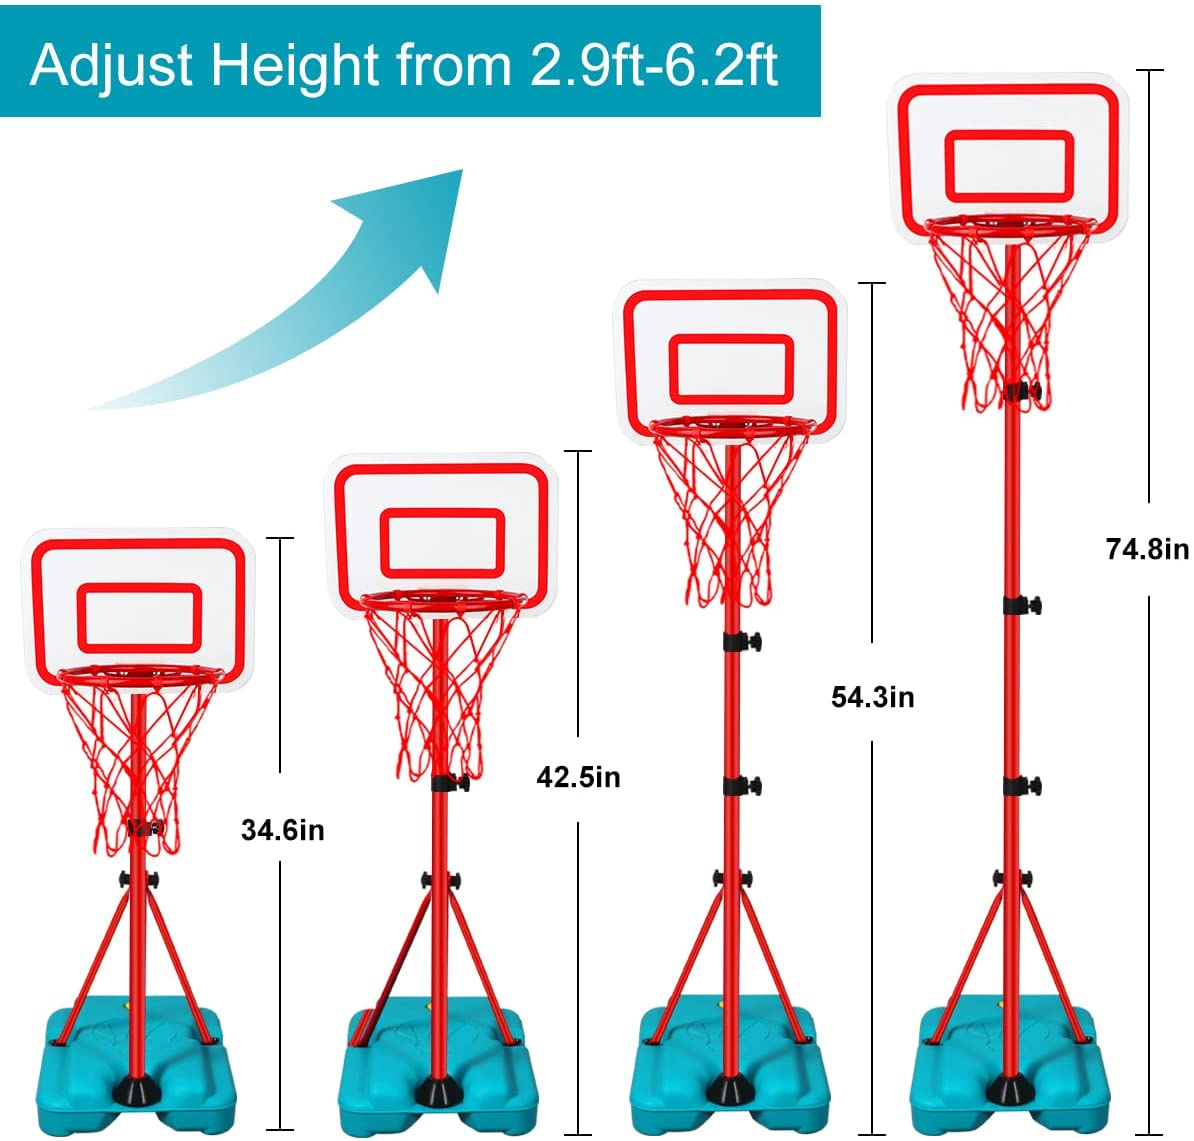 Best Choice kids basketball hoop set game,mini basketball hoop adjustable with stand